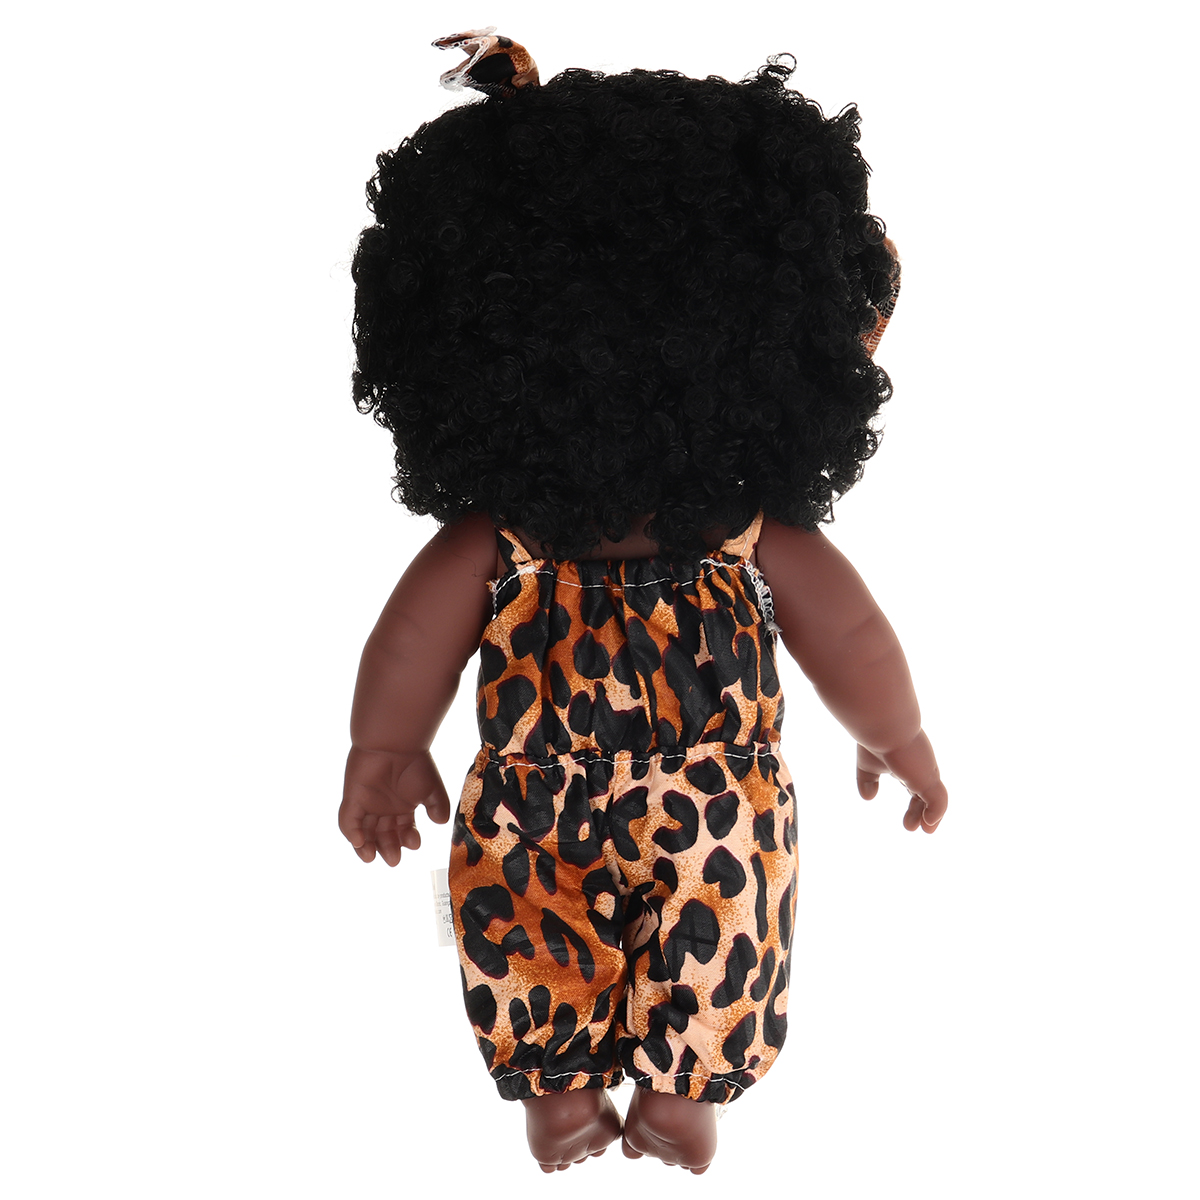 12Inch-Simulation-Soft-Silicone-Vinyl-PVC-Black-Baby-Fashion-Doll-Rotate-360deg-African-Girl-Perfect-1734367-10